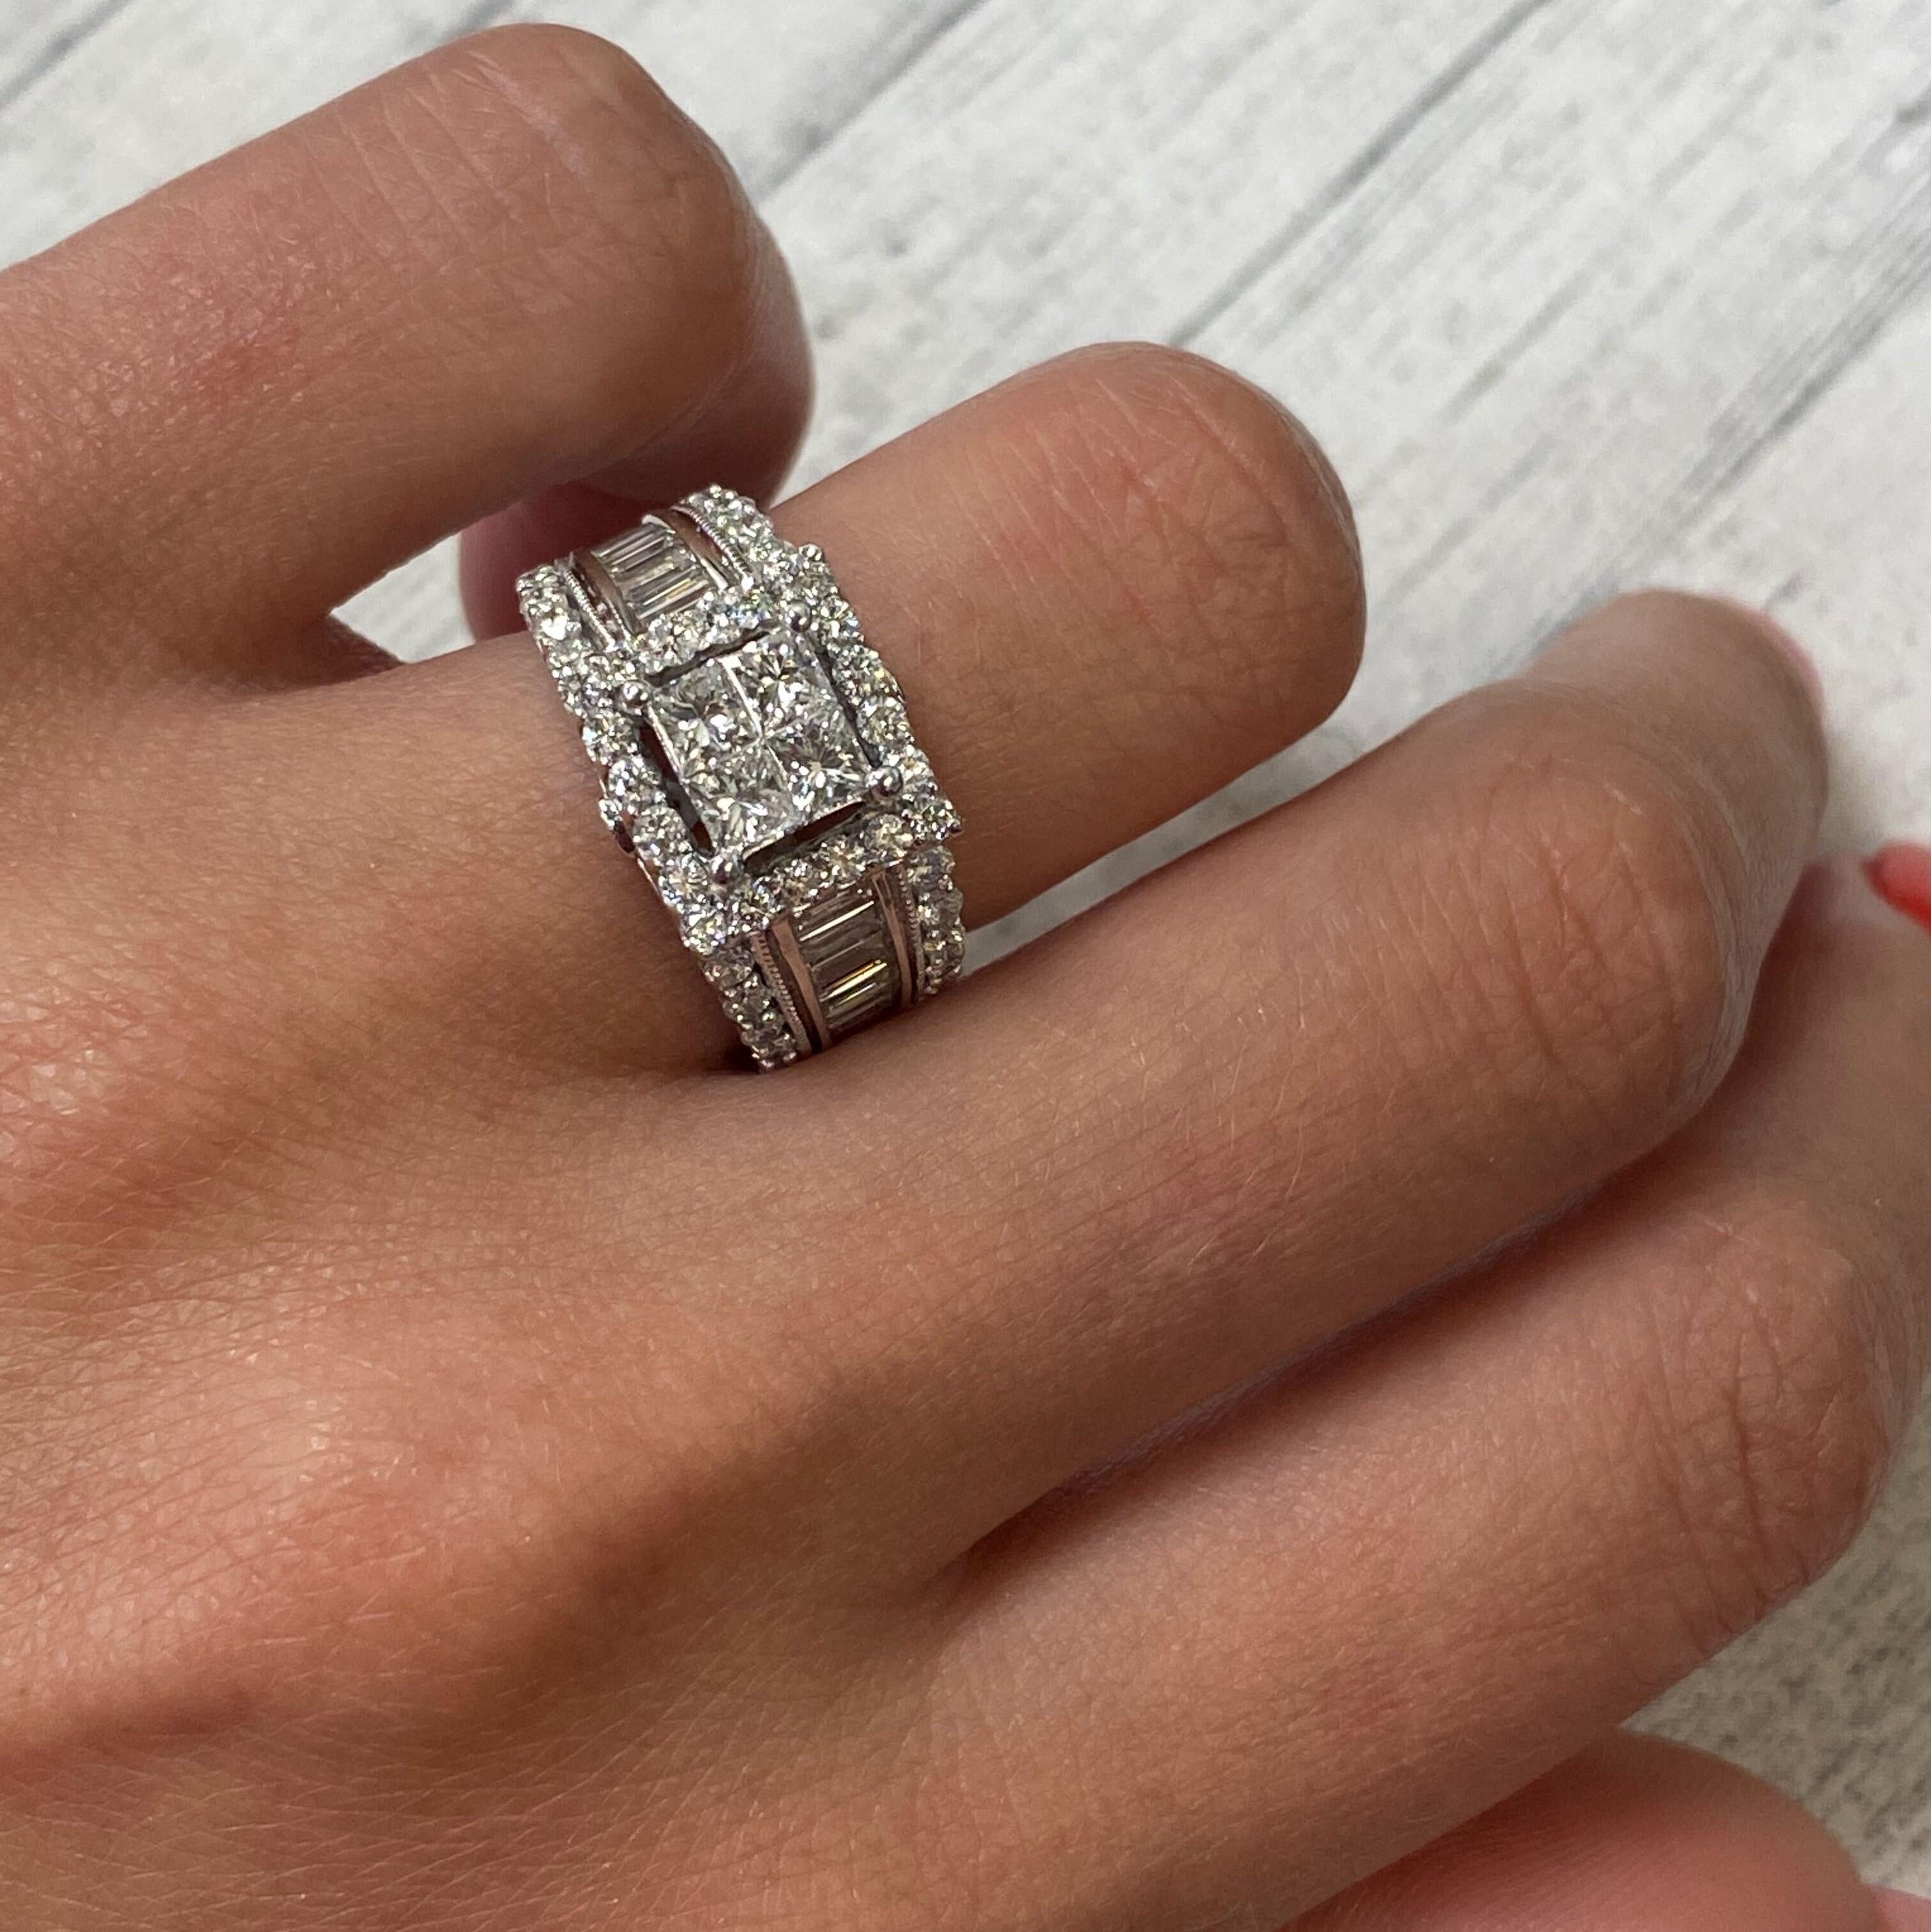 Rachel Koen Princess Cut Diamond Engagement Ring 14k White Gold 2.00cttw For Sale 1